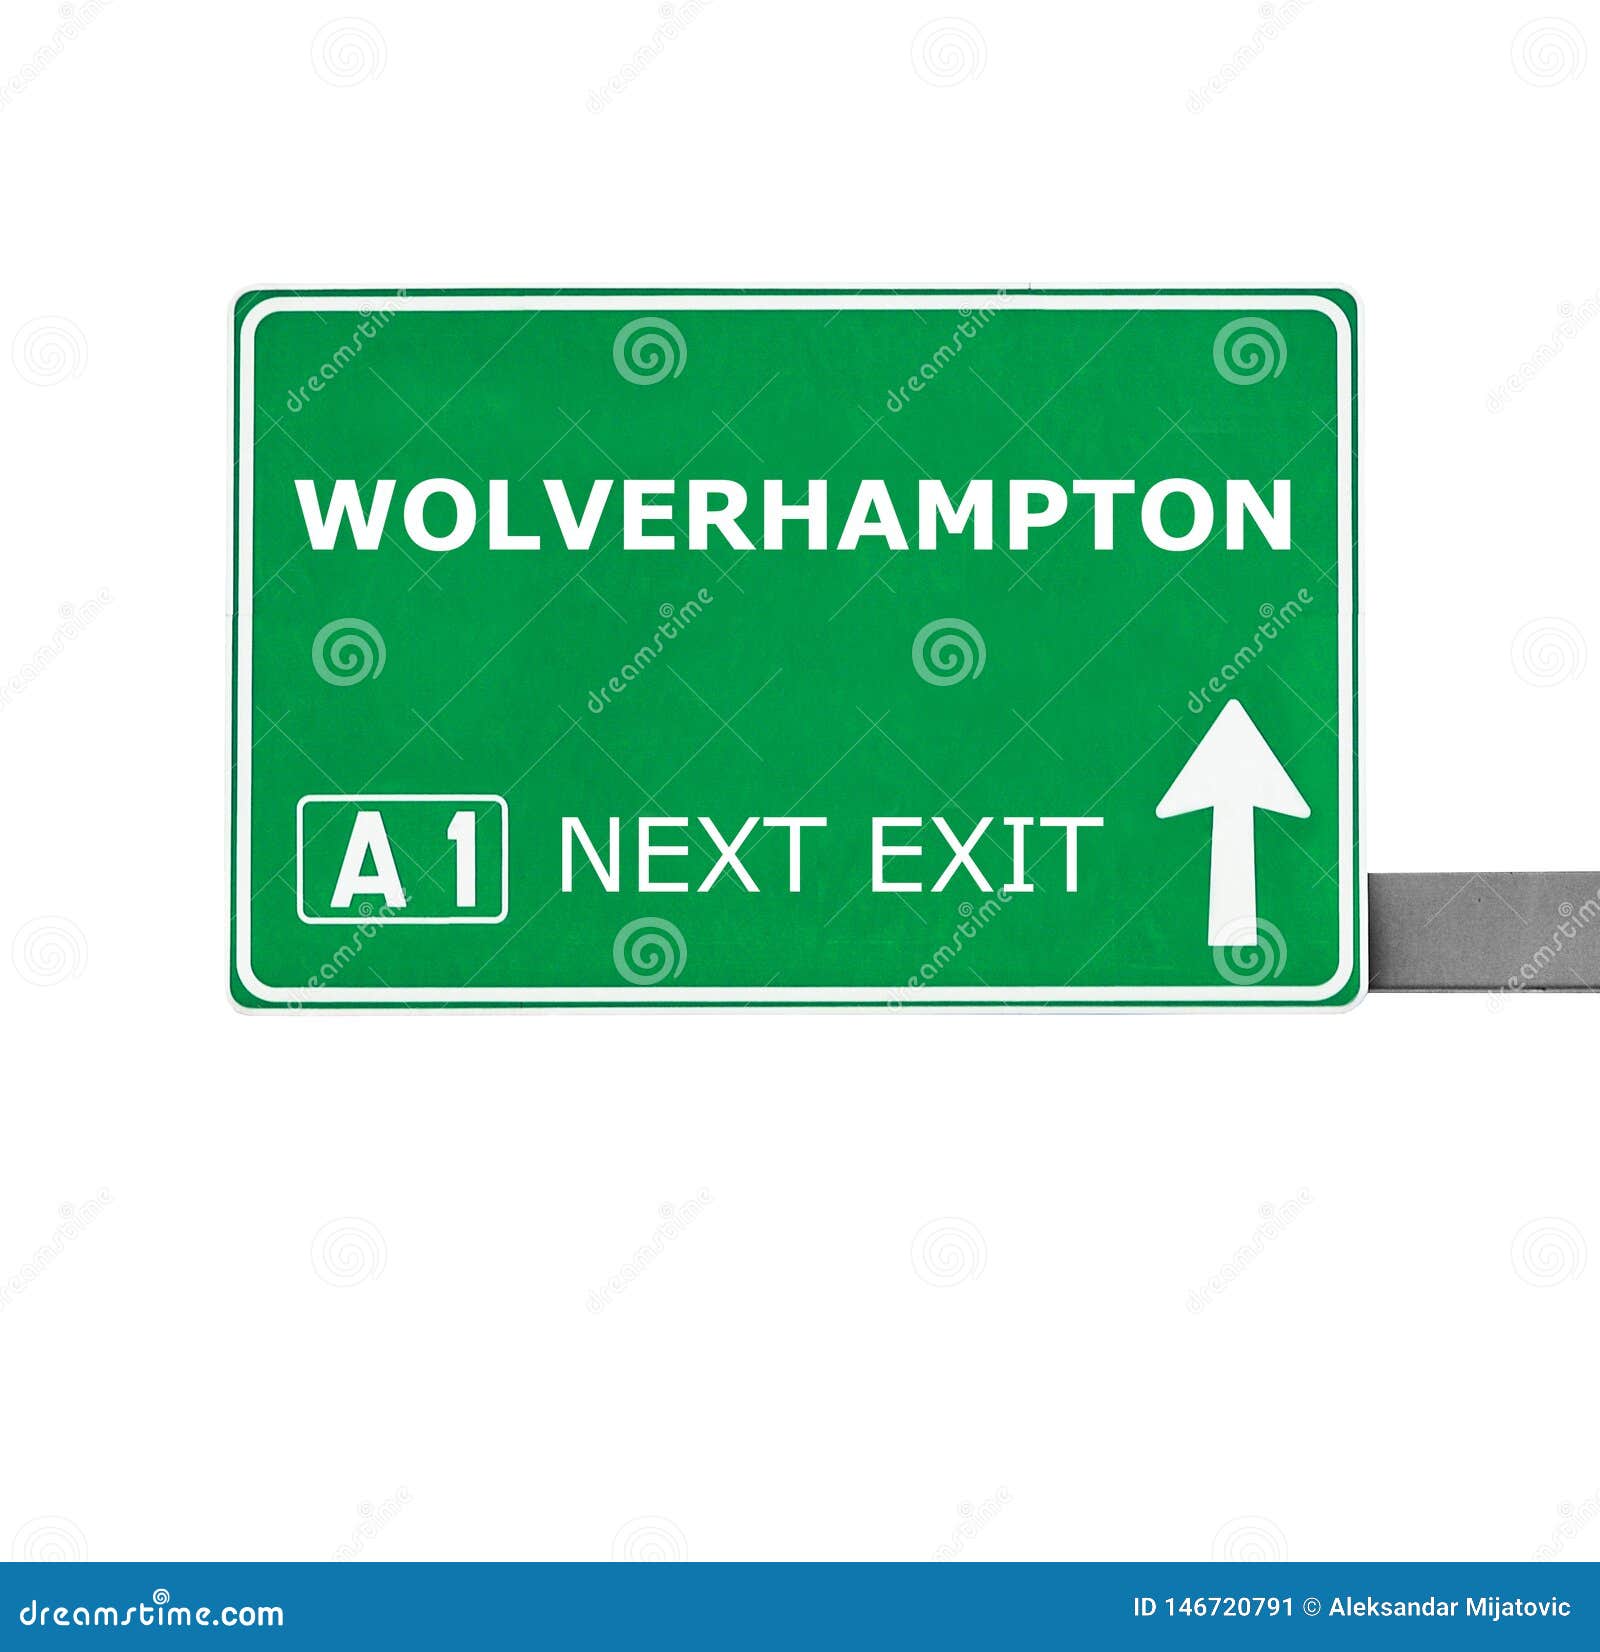 wolverhampton road sign  on white